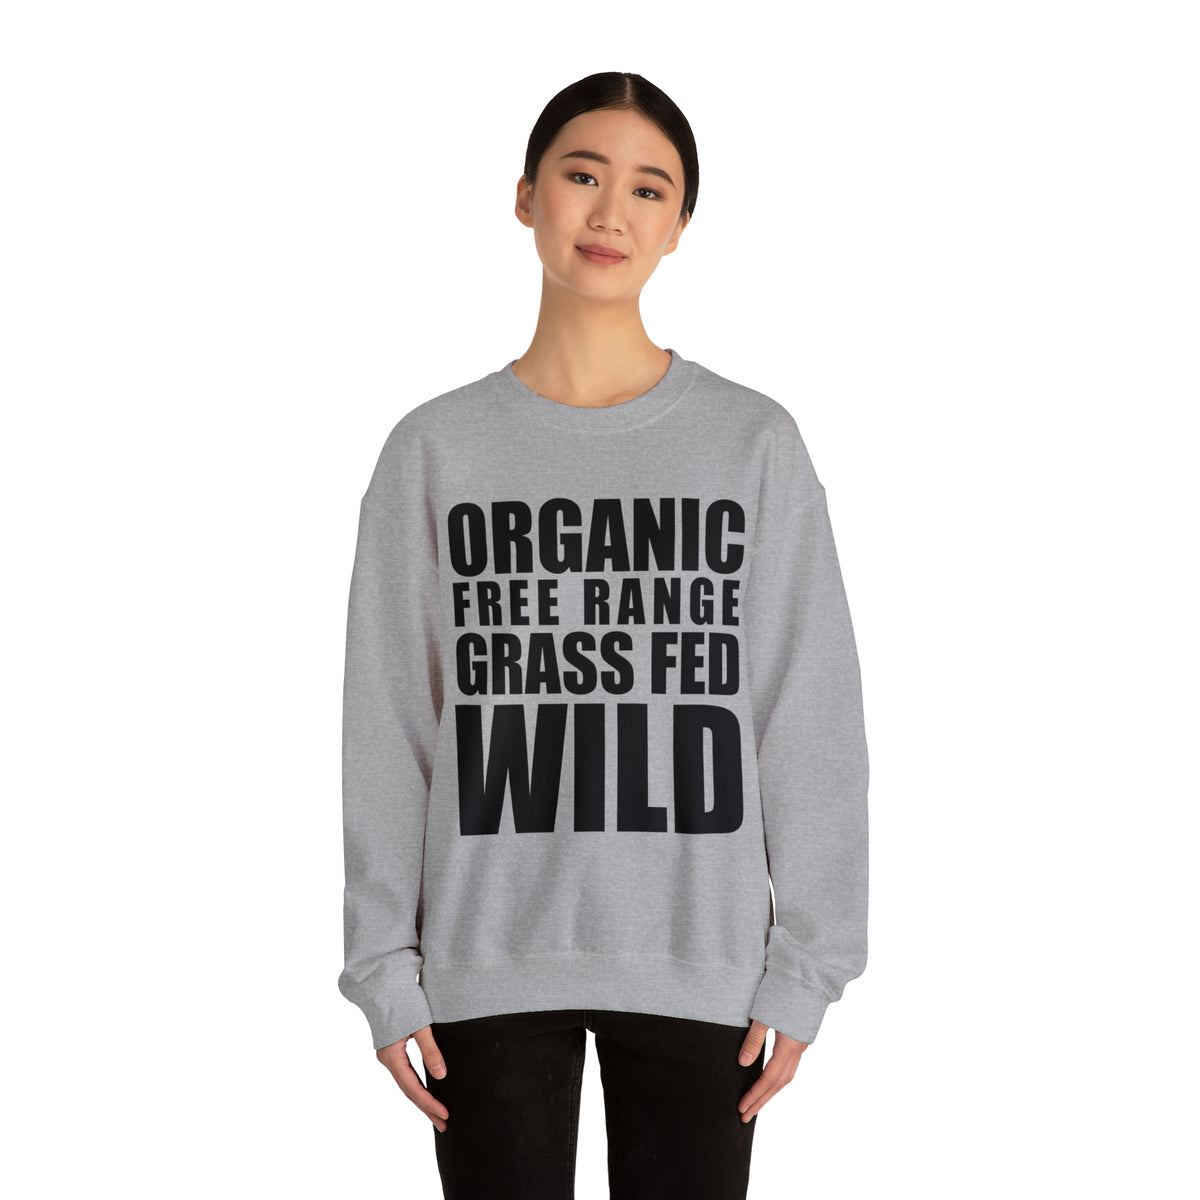 Organic, free-range, grass-fed & wild